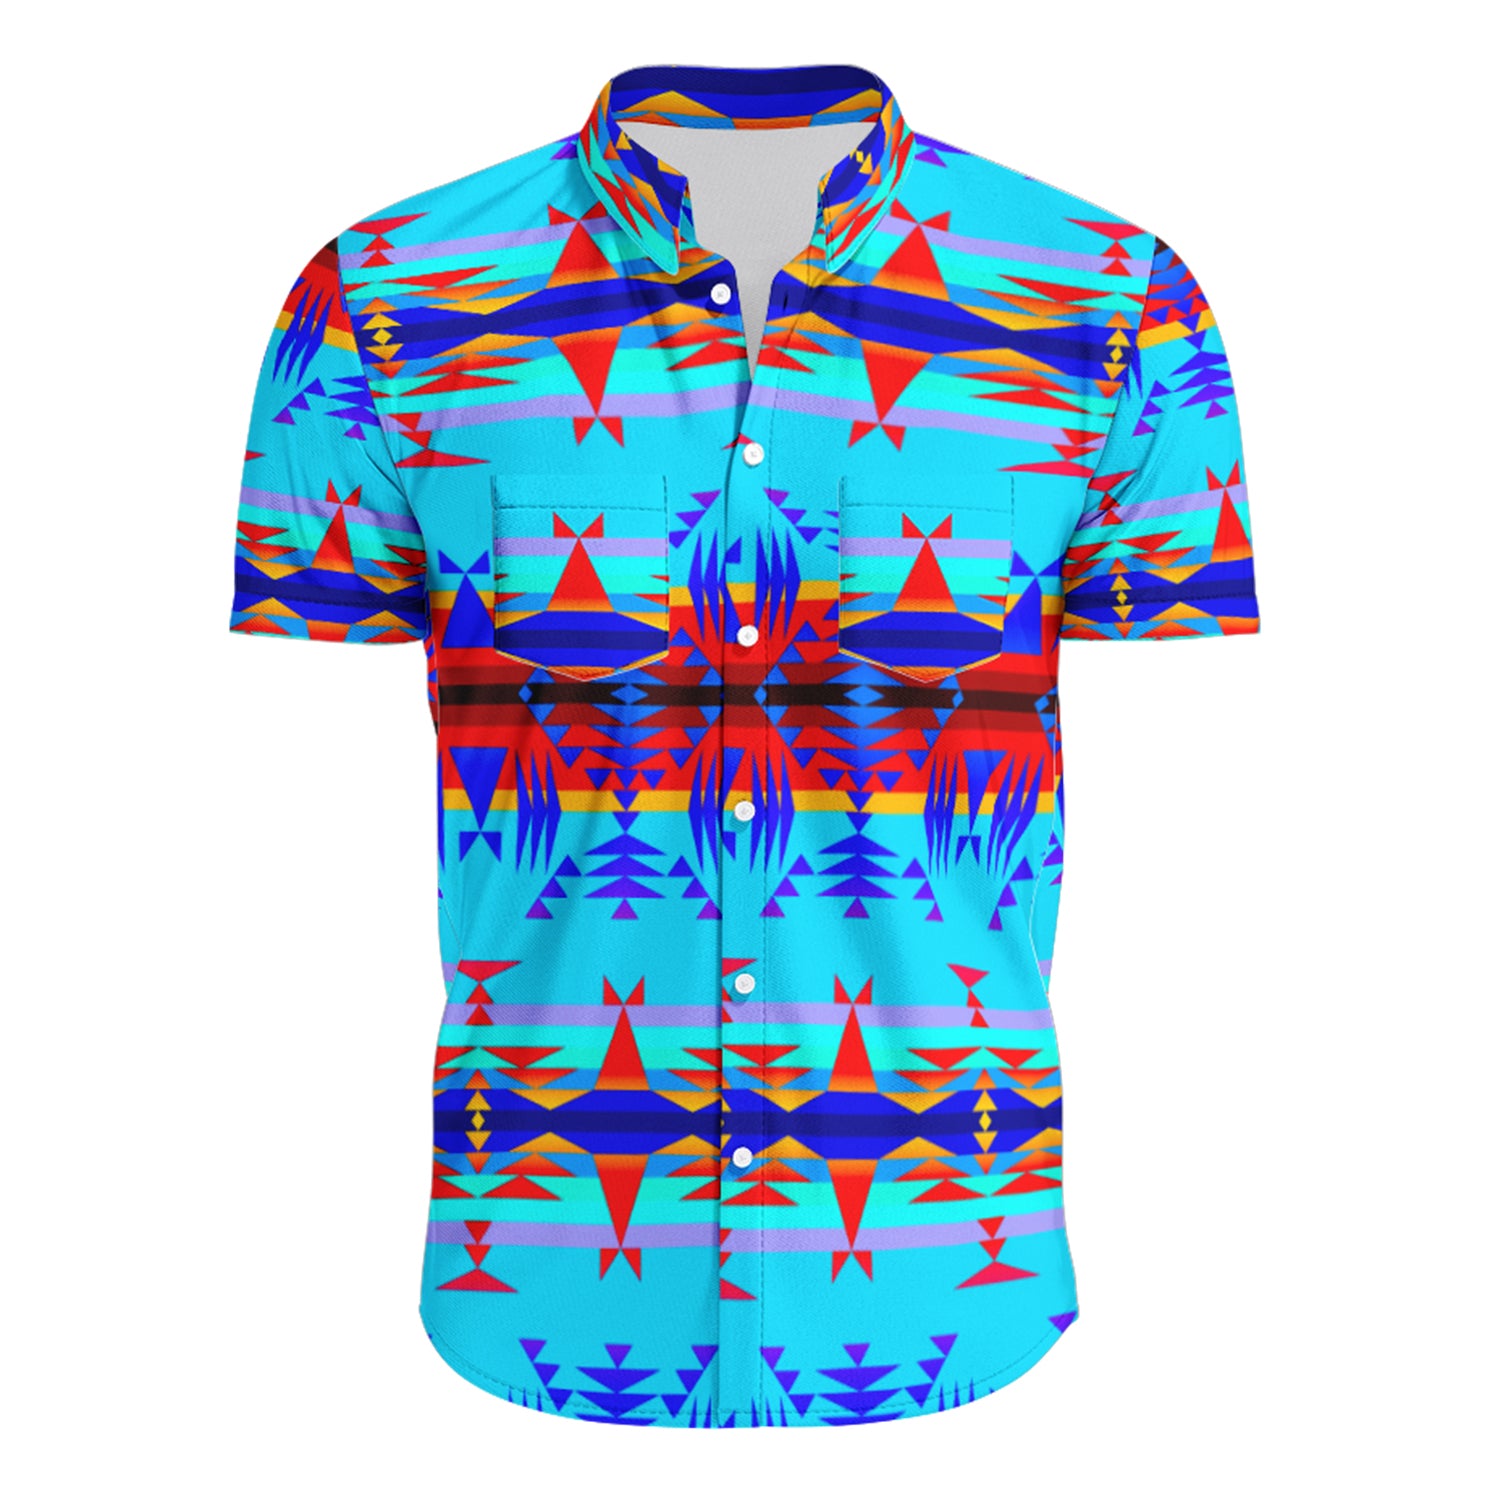 Between the Mountains Blue Hawaiian-Style Button Up Shirt